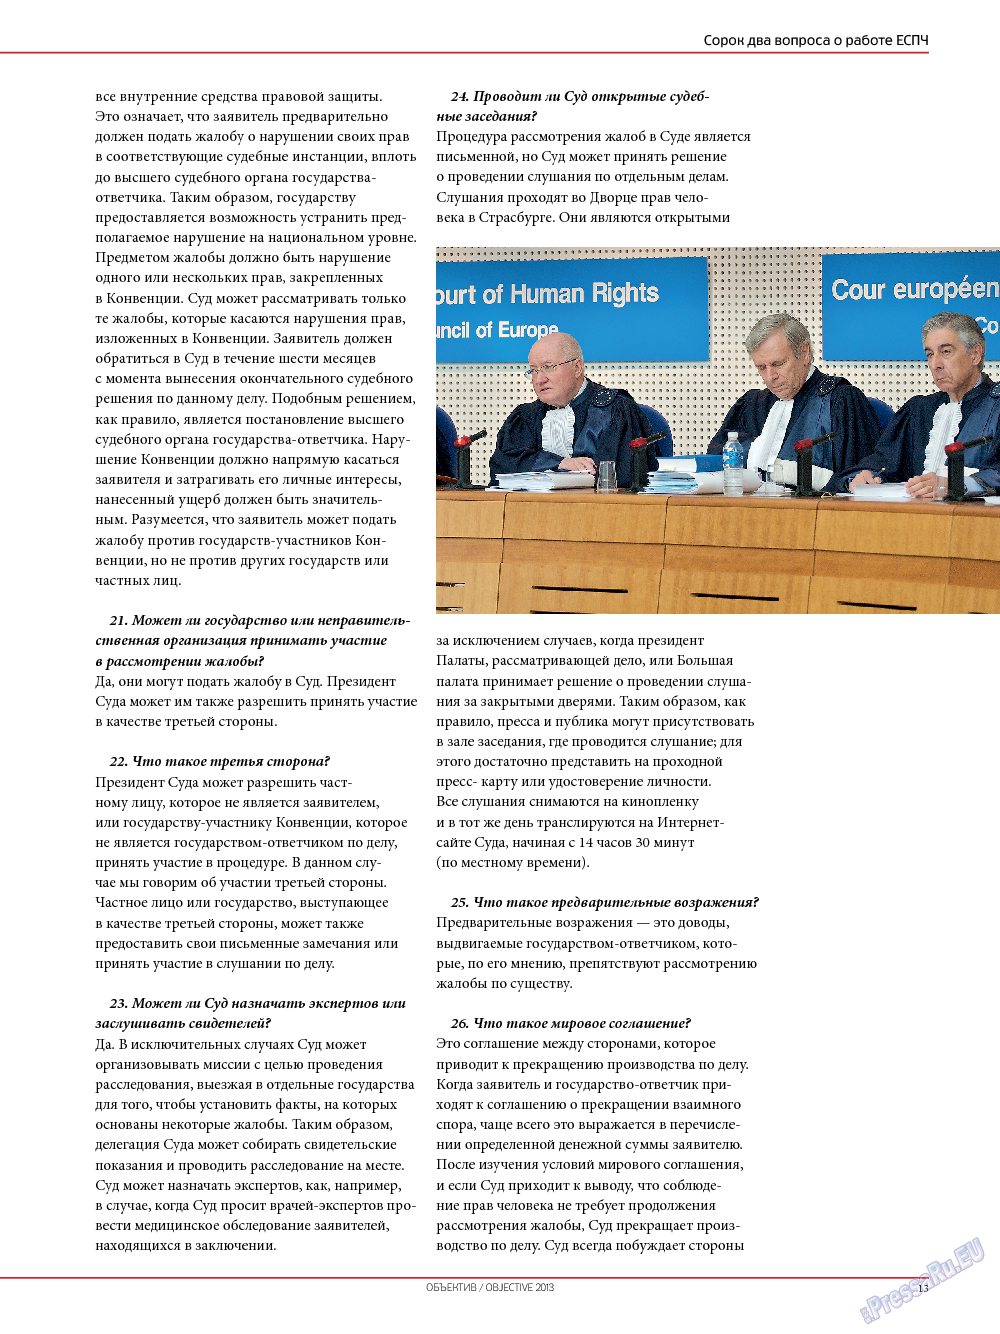 Объектив EU, журнал. 2013 №3 стр.15